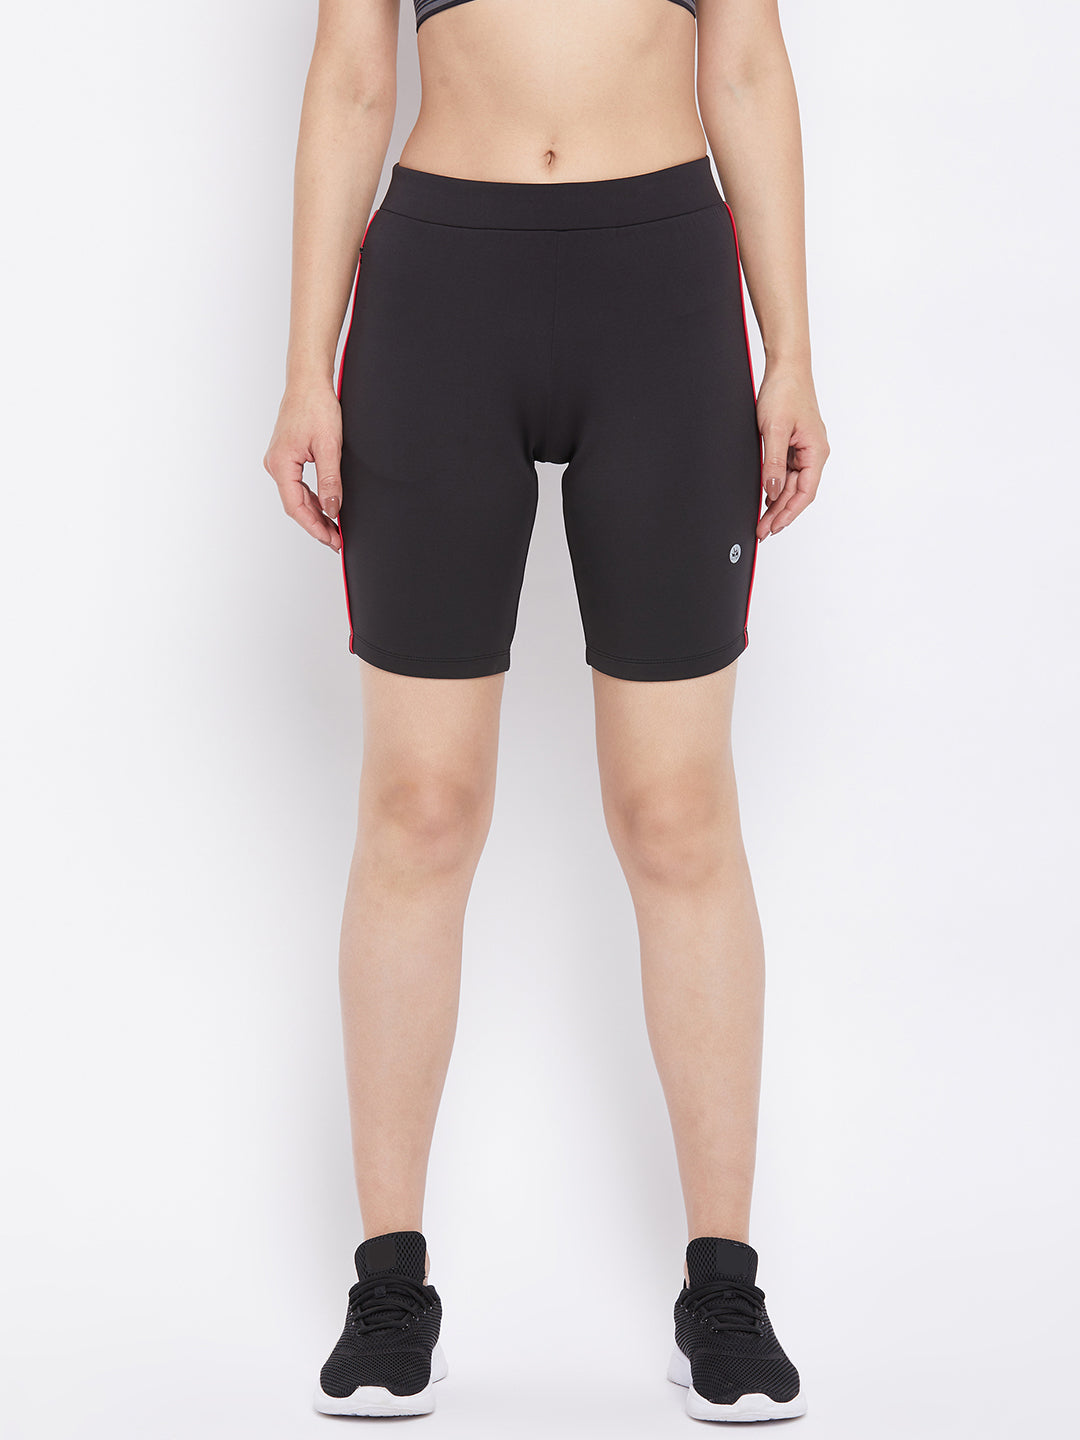 Black Sports Shorts - Women Shorts